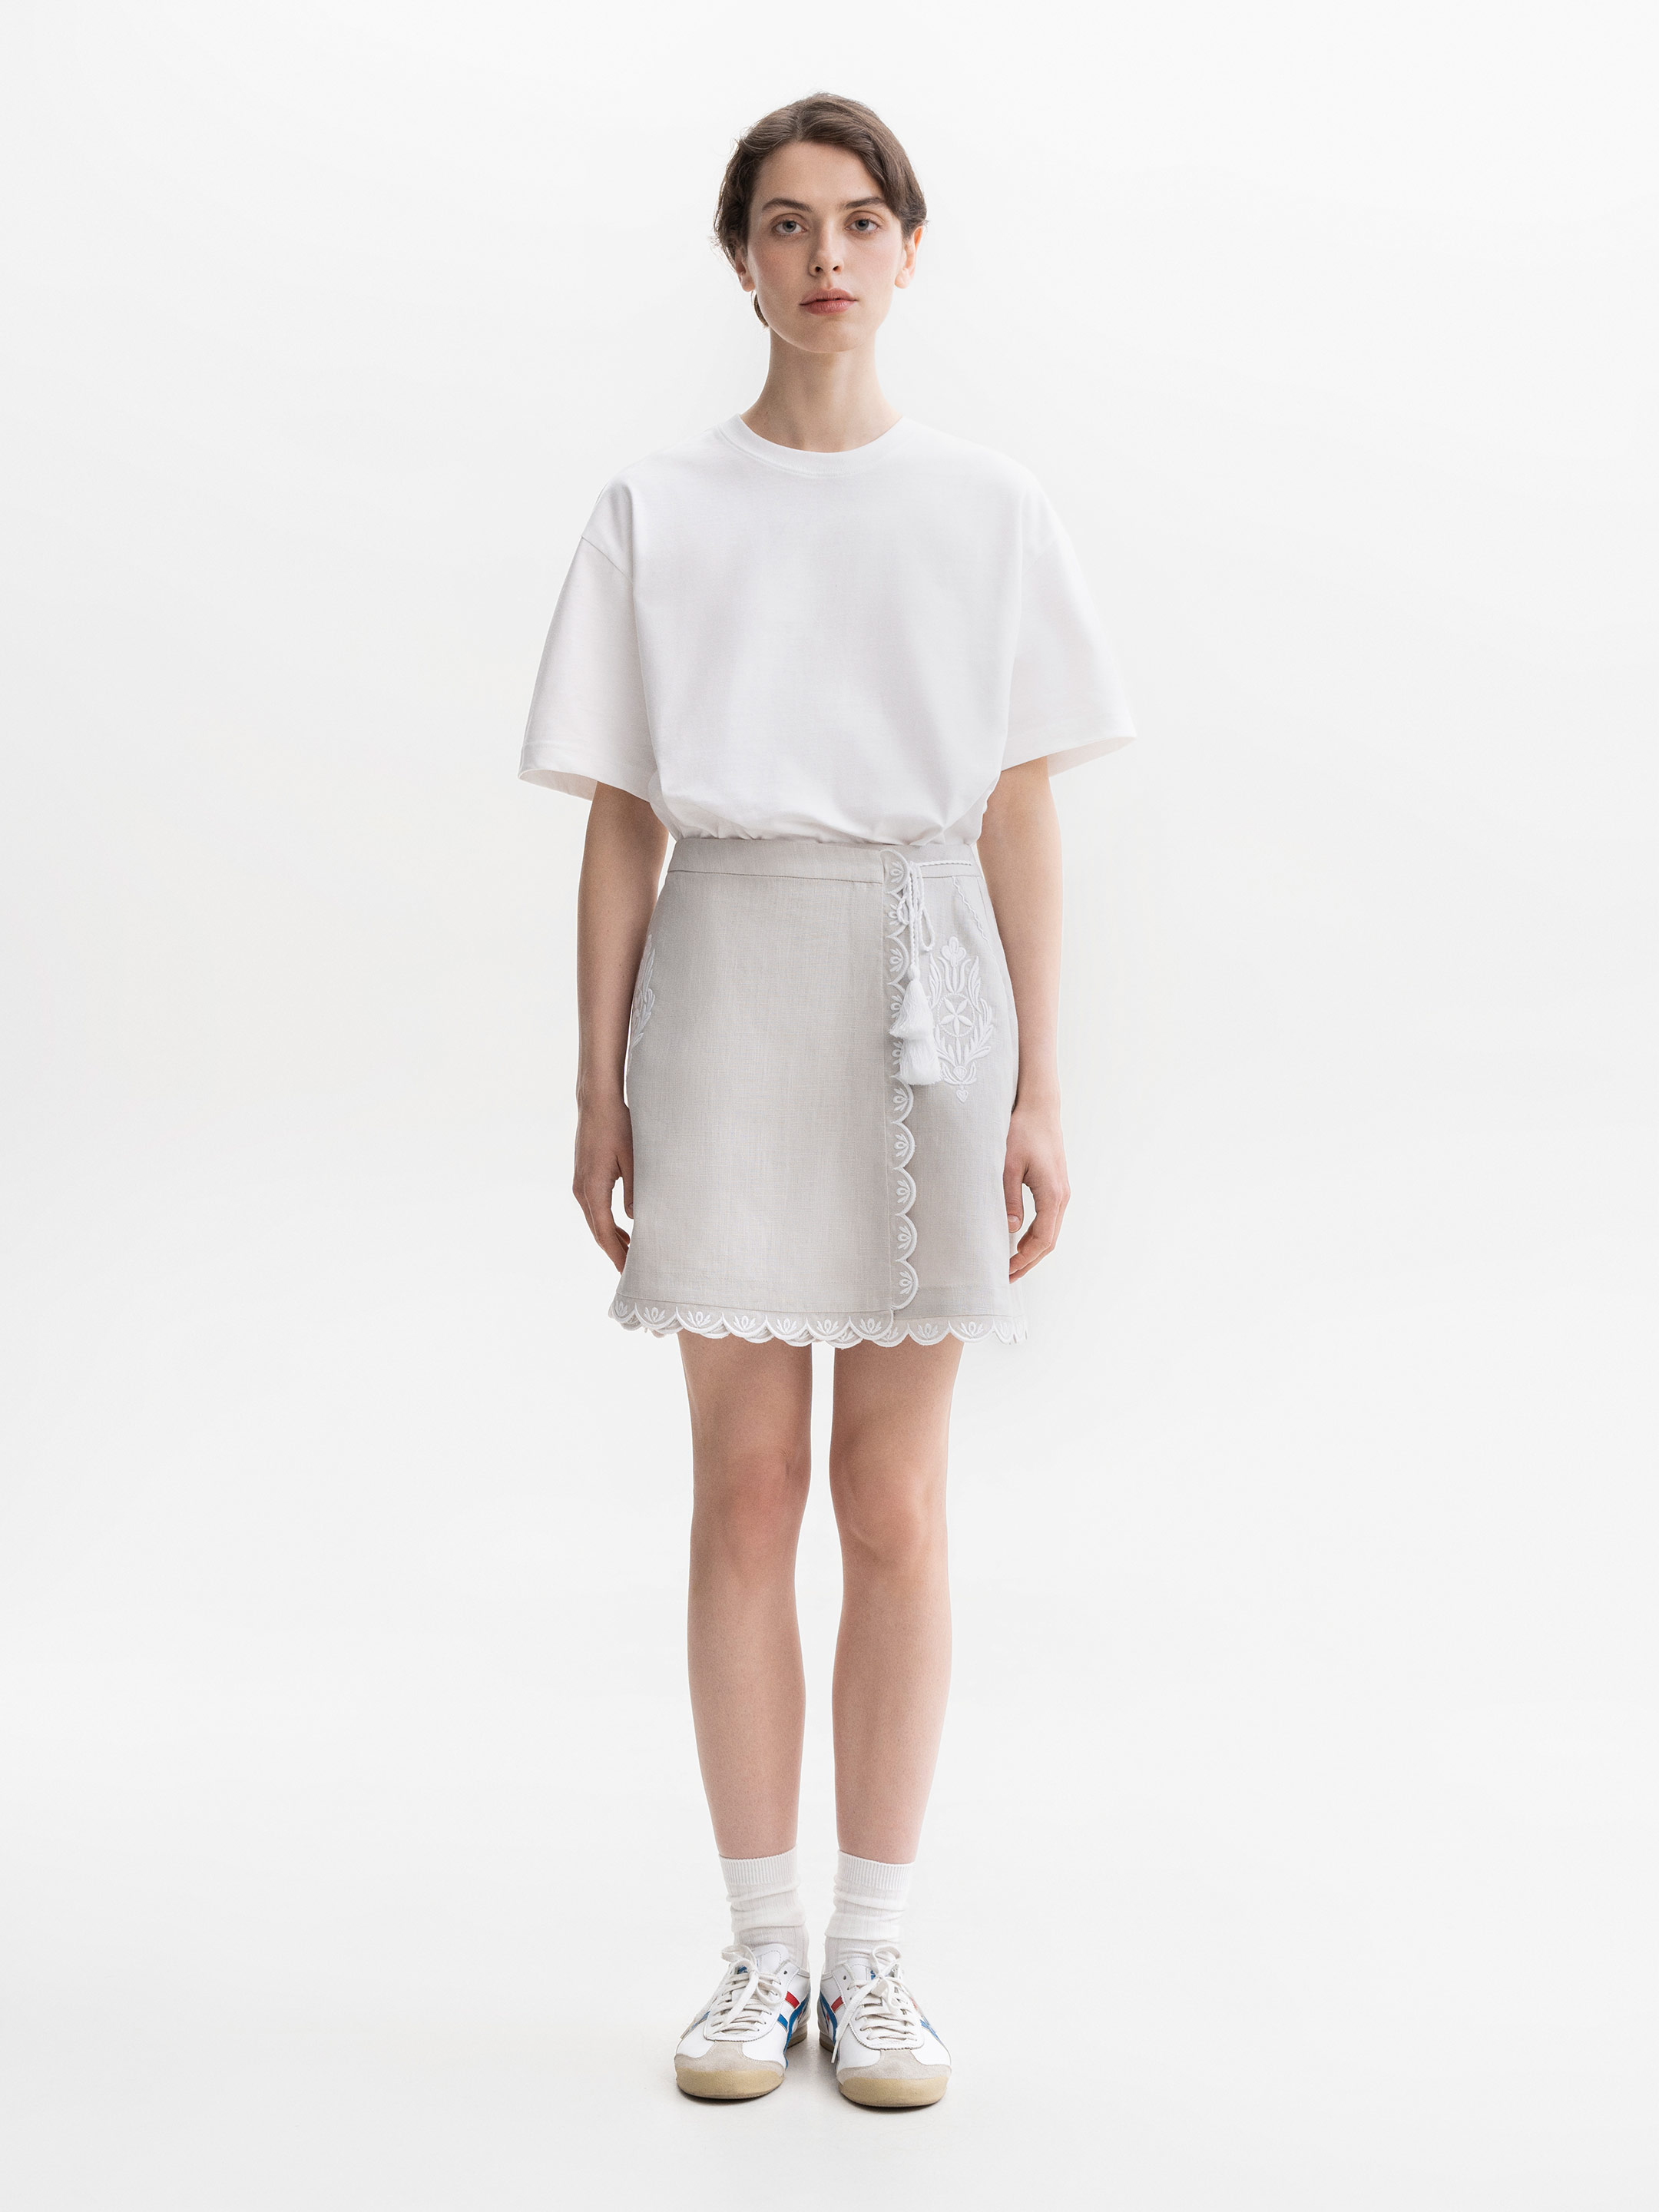 Gray linen skirt with white embroidery Nova Kakhovka - photo 1